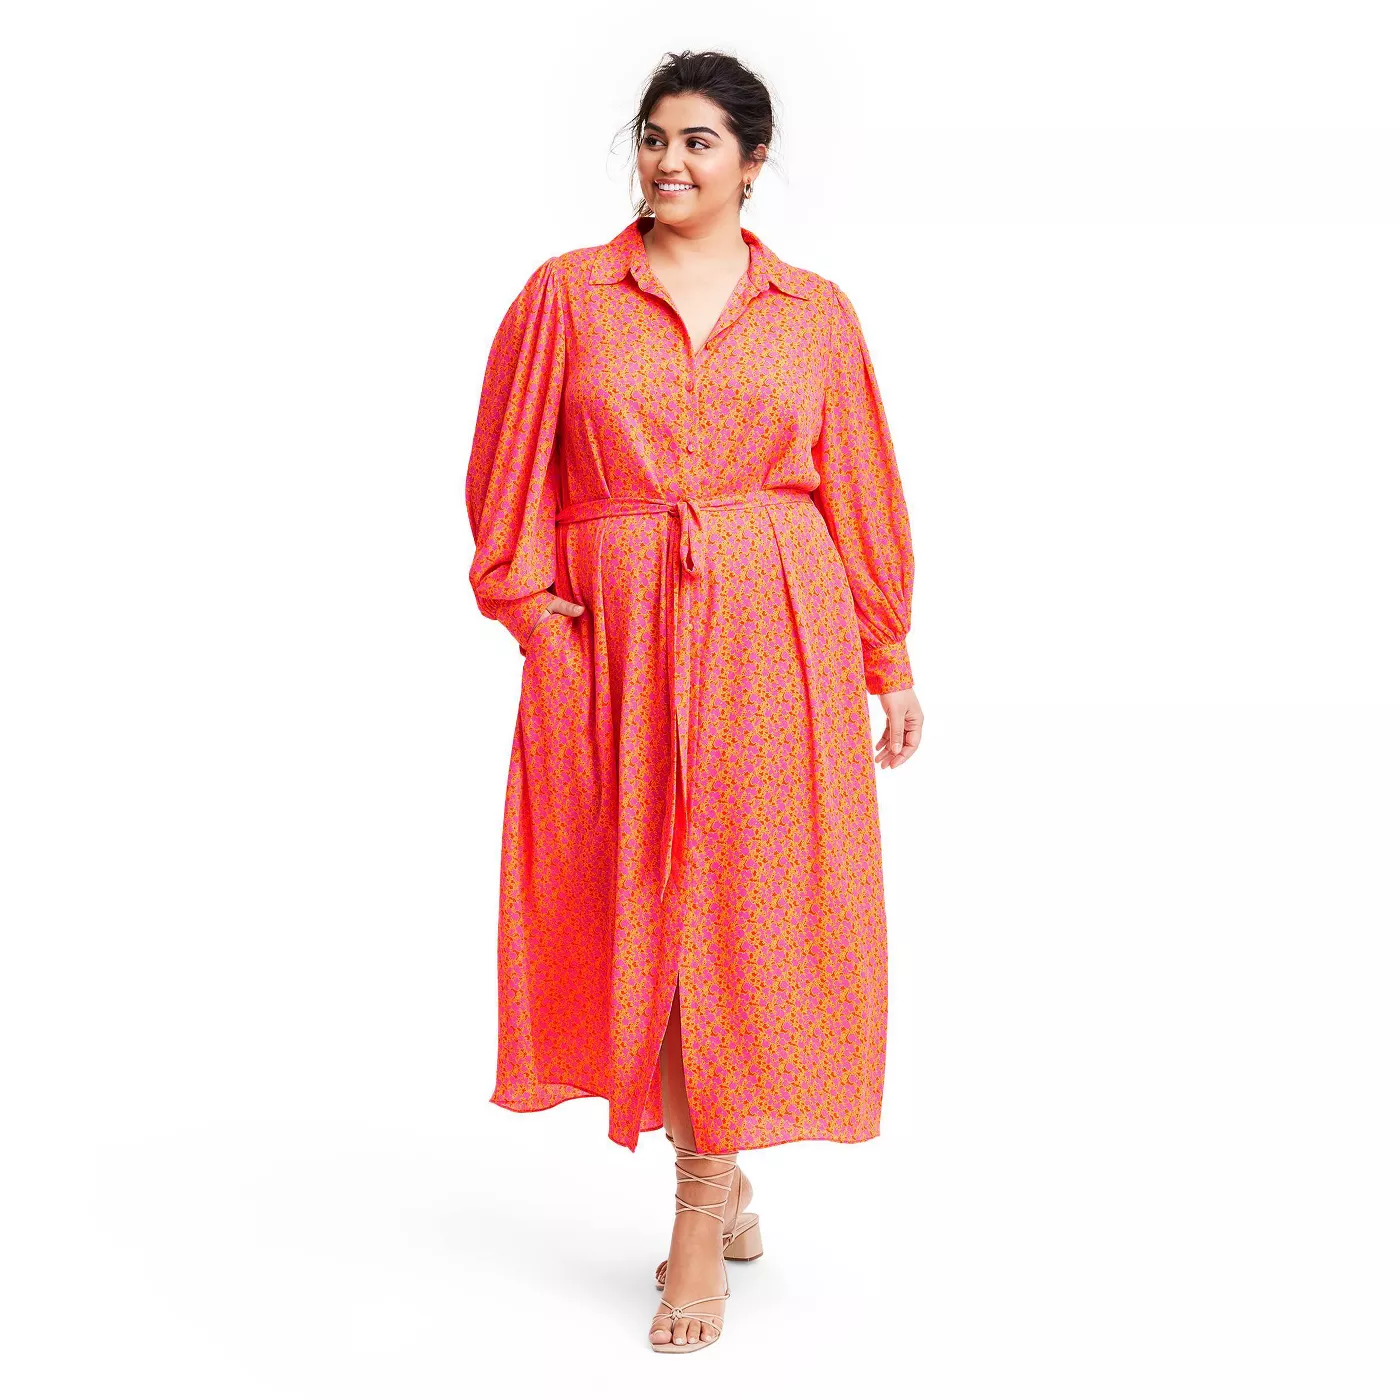 Floral Long Sleeve Robe Dress - ALEXIS for Target Orange